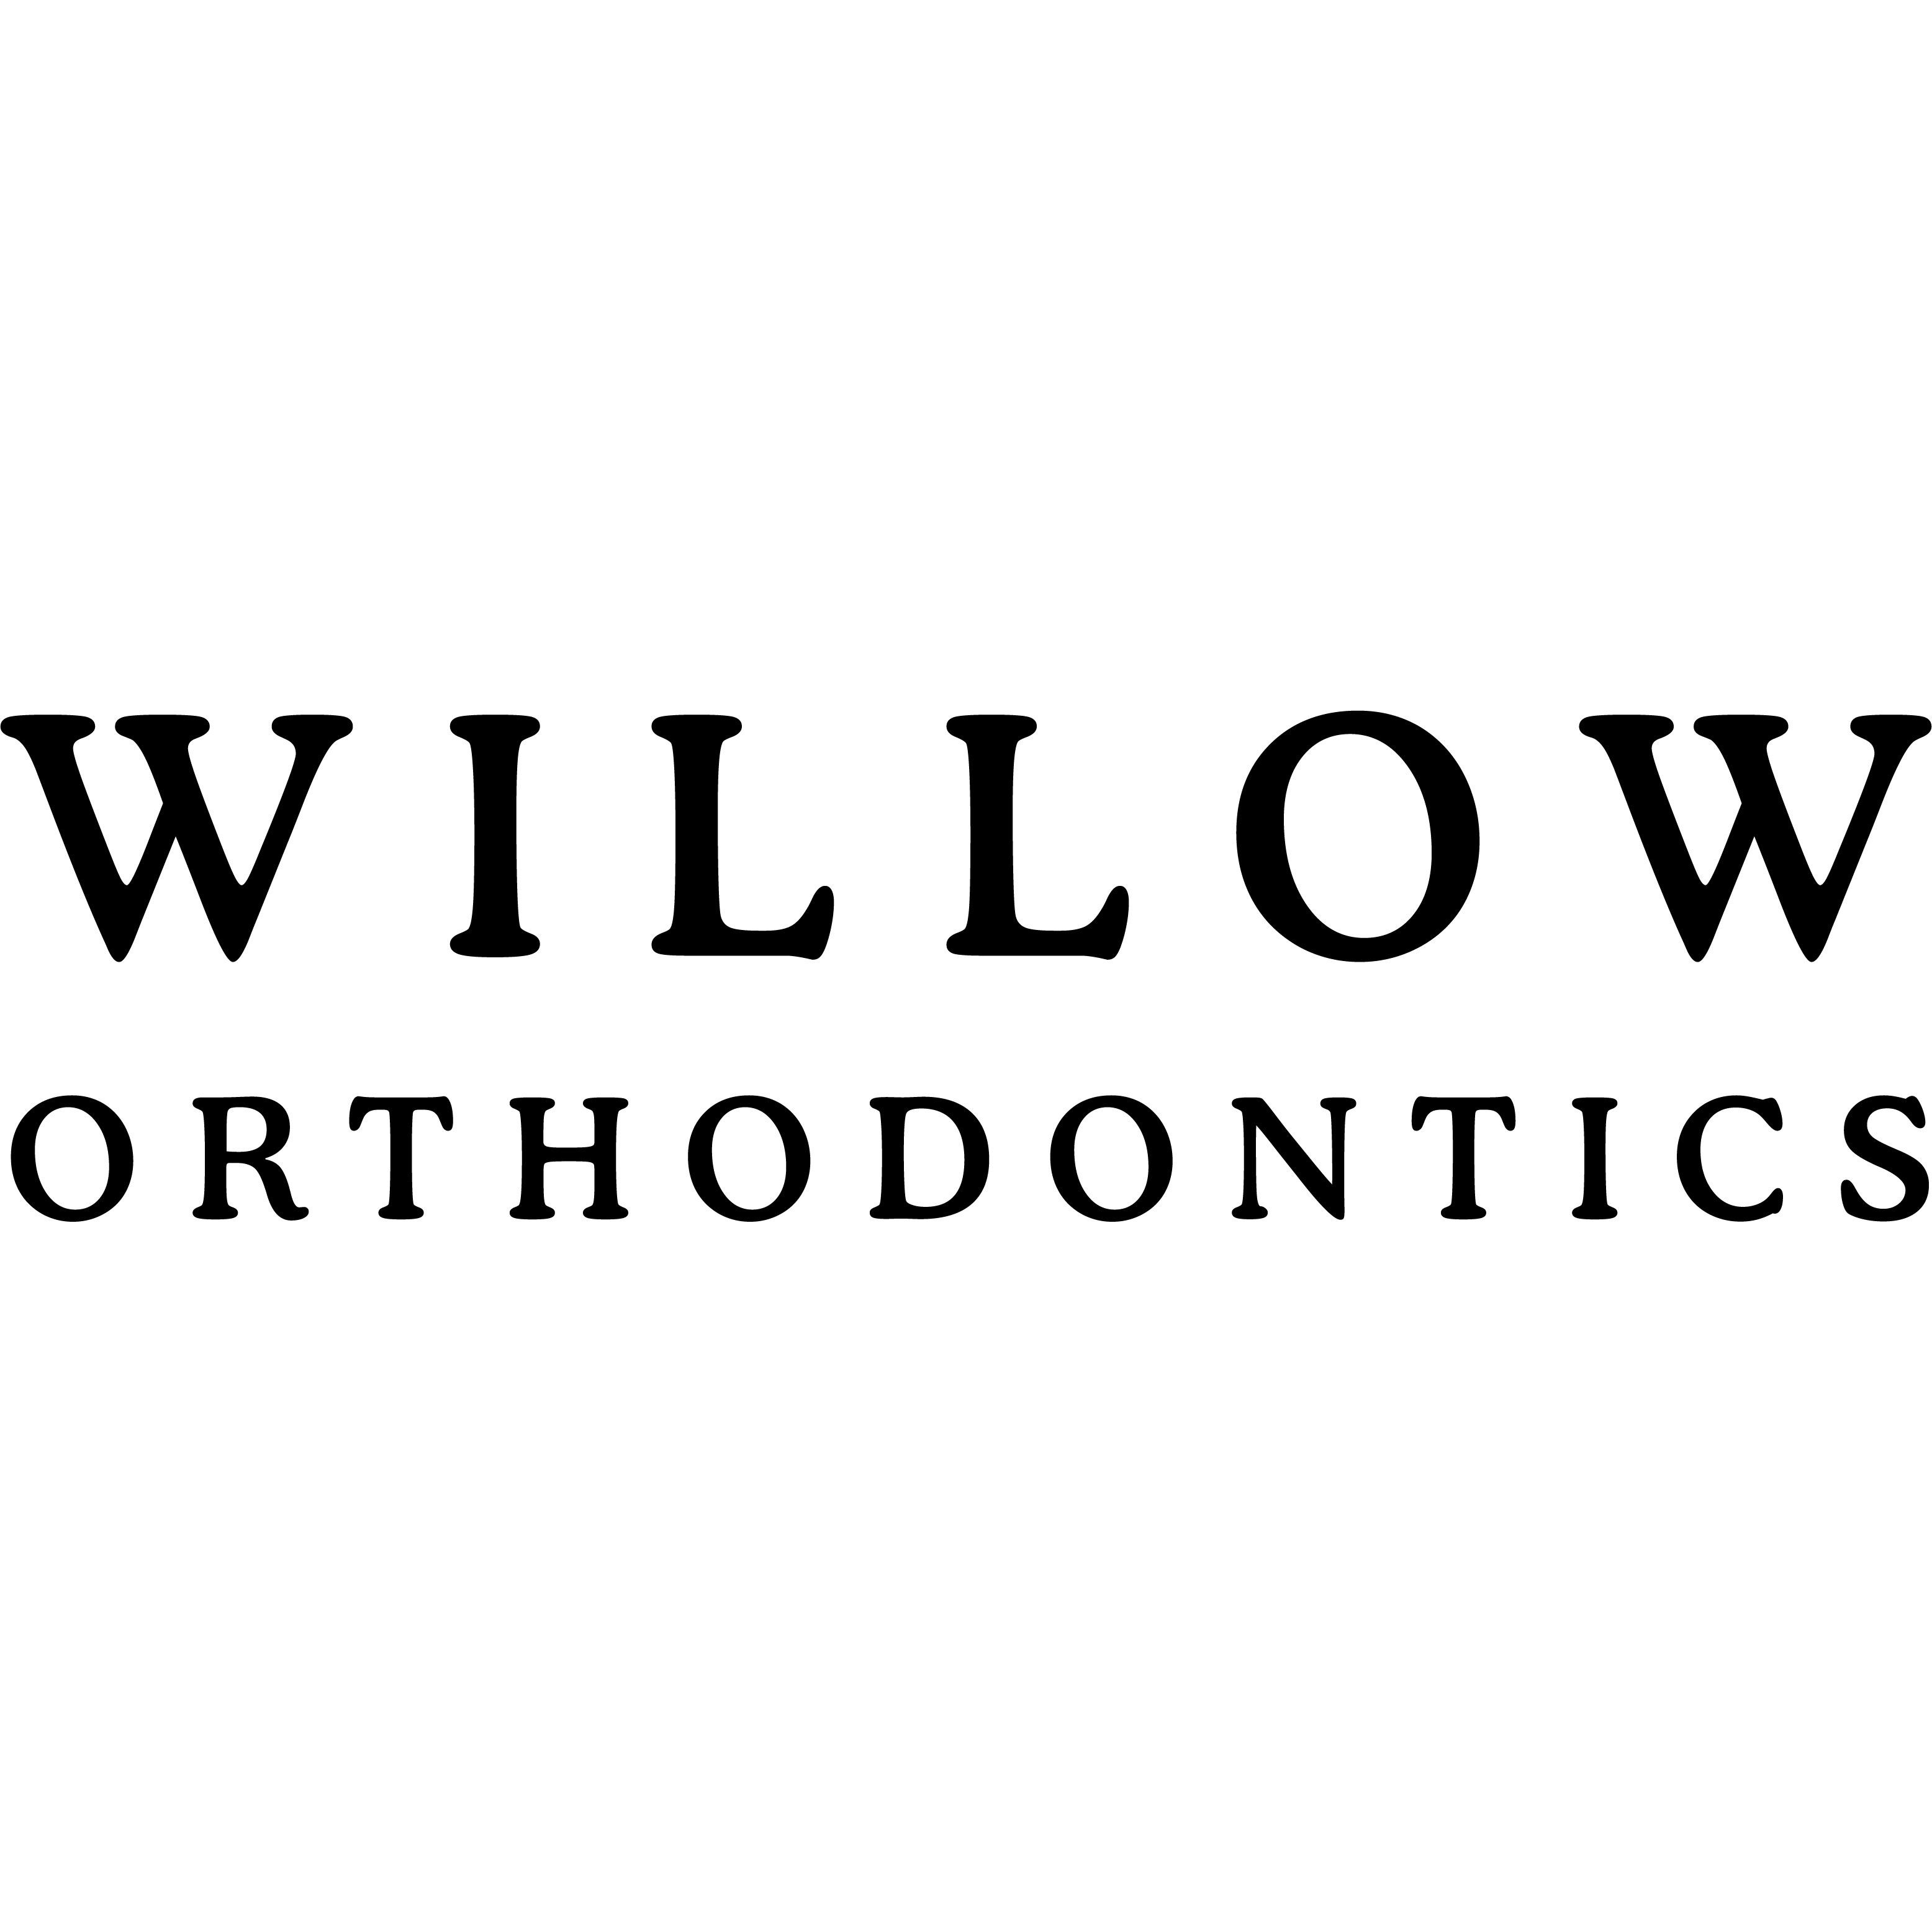 Willow Orthodontics - Marietta/East Cobb